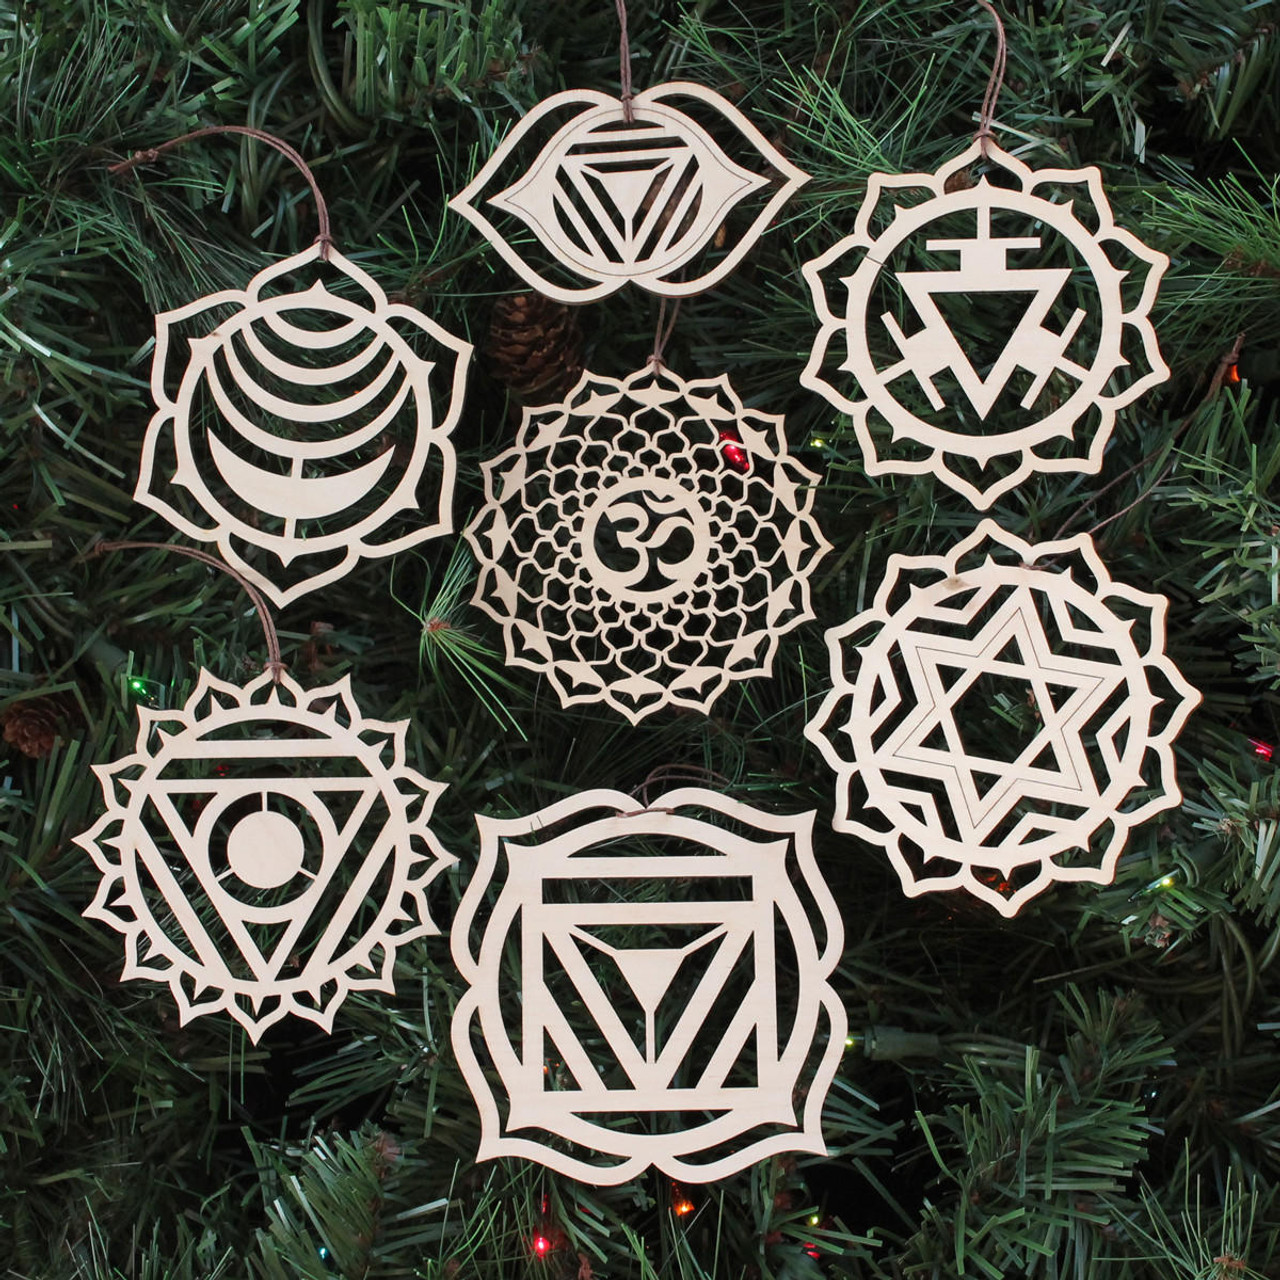 Snowflake Ornaments - Set of Seven - Laser Cut Wood